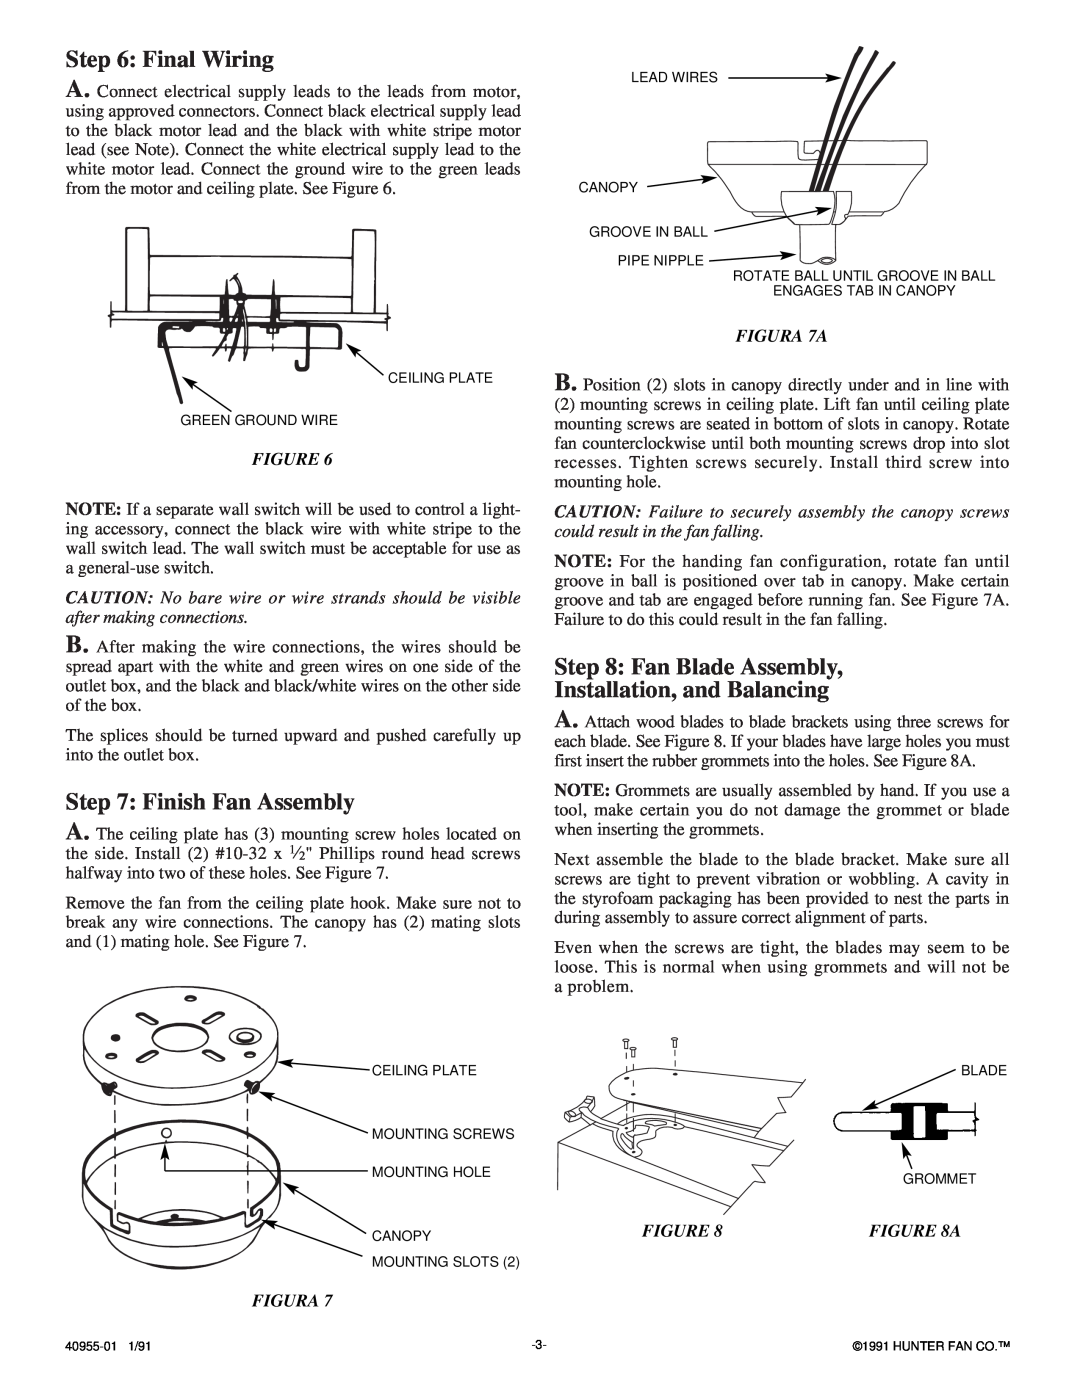 Hunter Fan 40955-01 Final Wiring, Finish Fan Assembly, Fan Blade Assembly, Installation, and Balancing, Figura, FIGURA 7A 